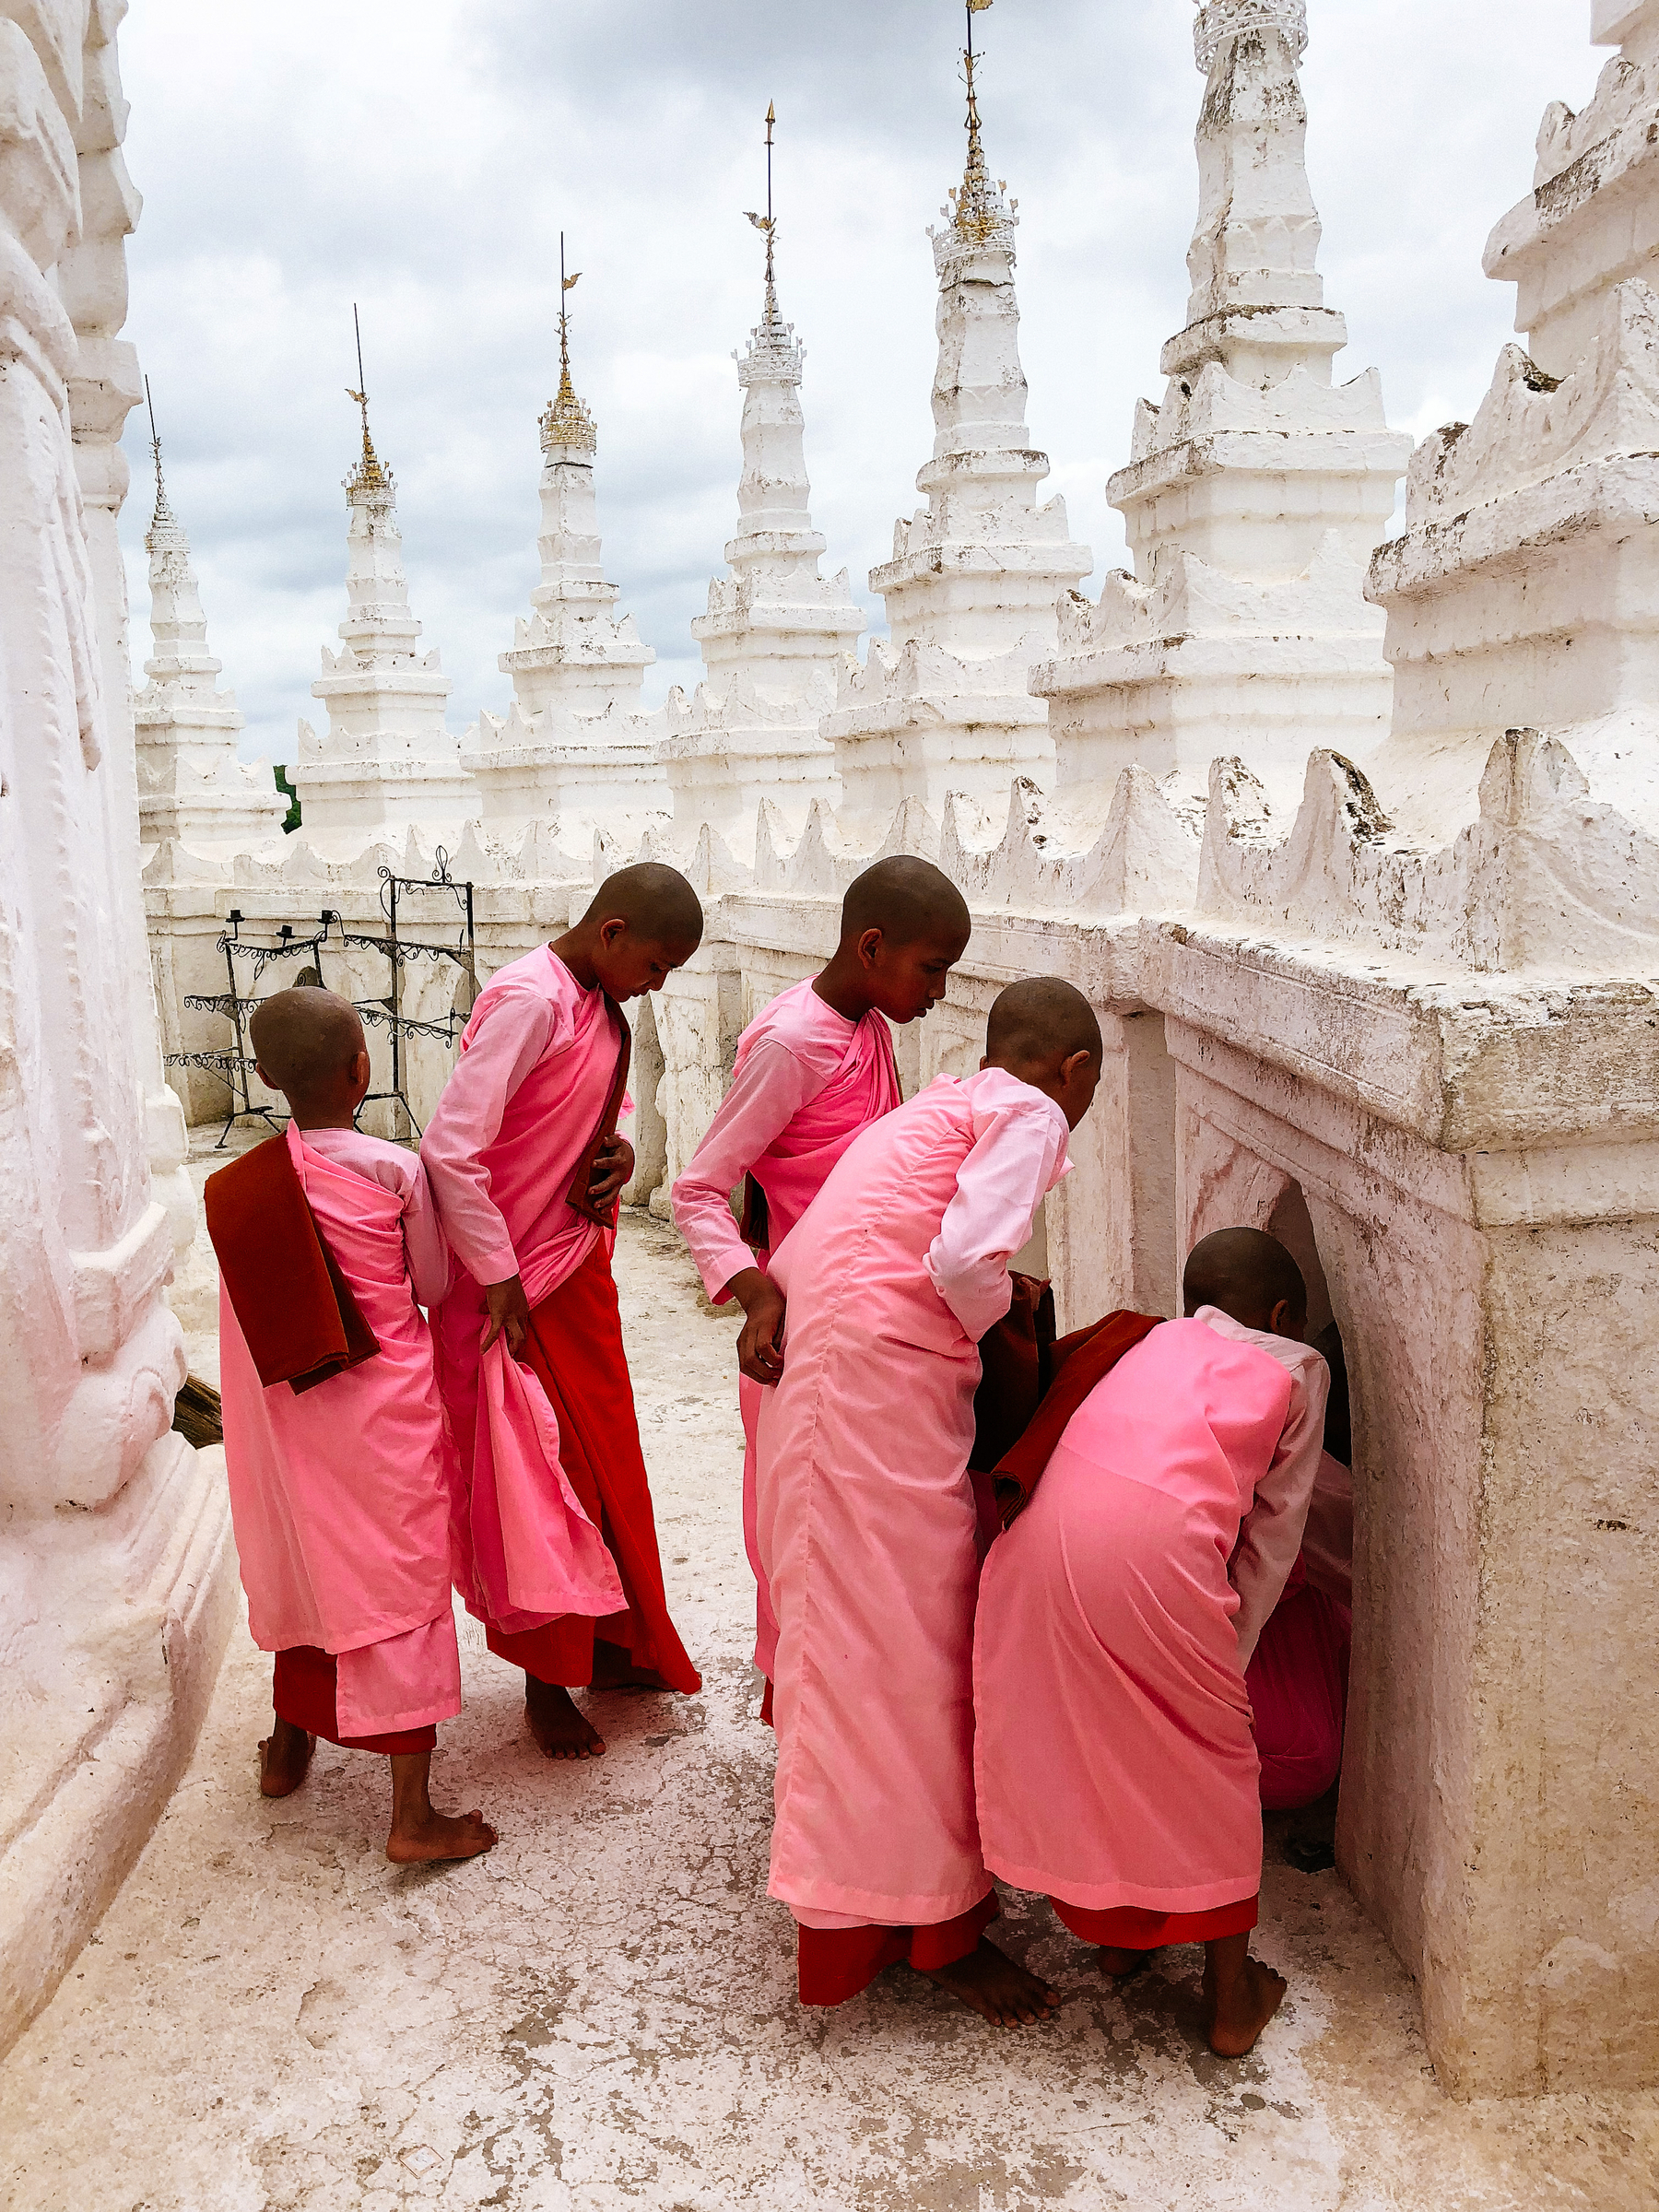 nuns in Myanmar, dressed in pink robes